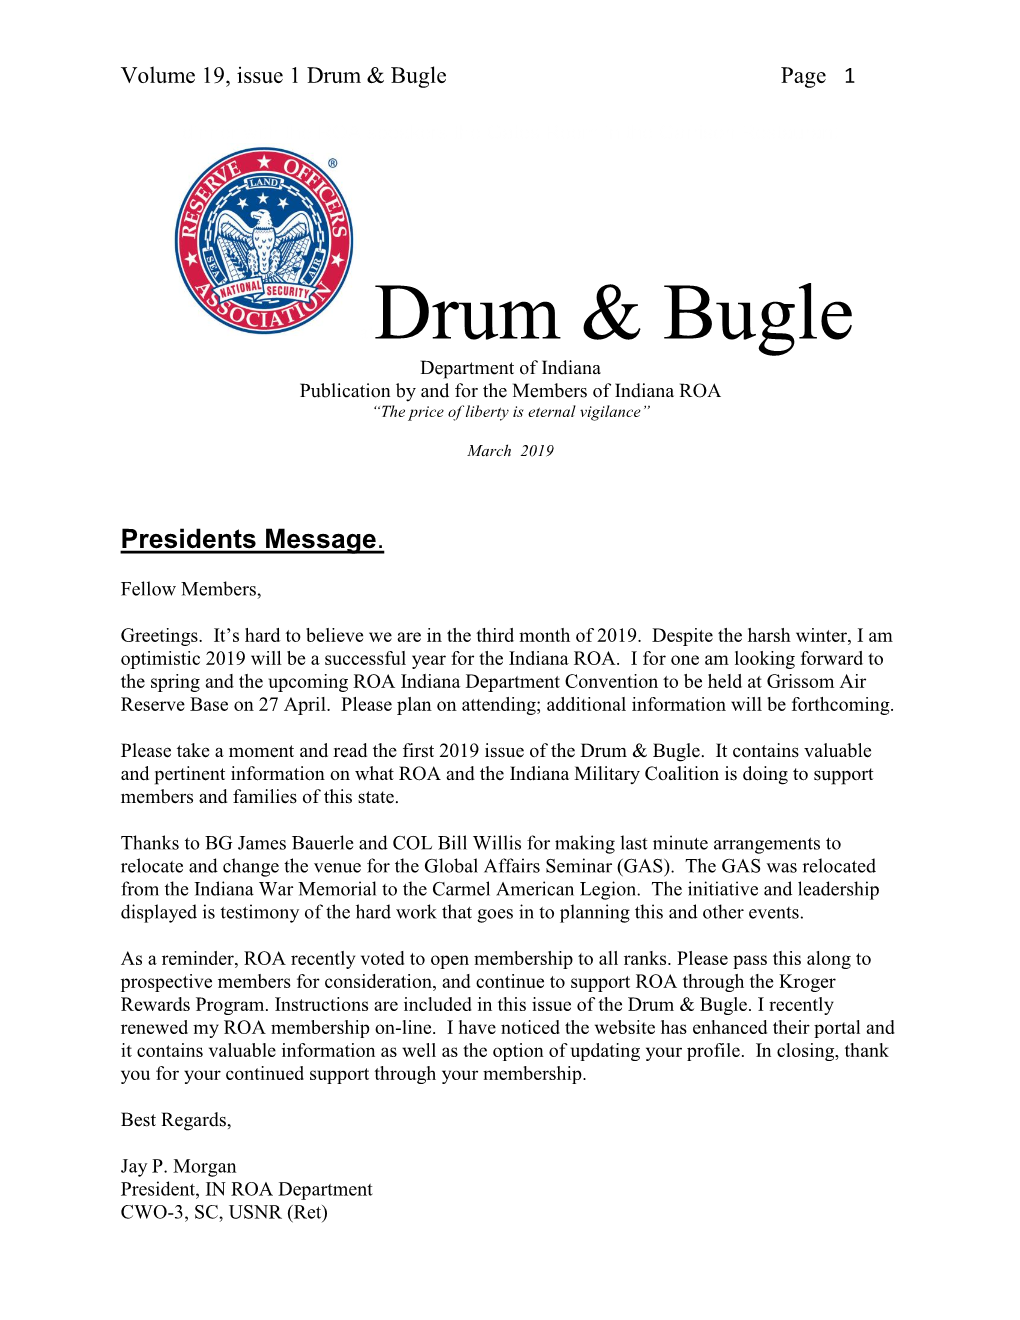 Drum & Bugle March 2019